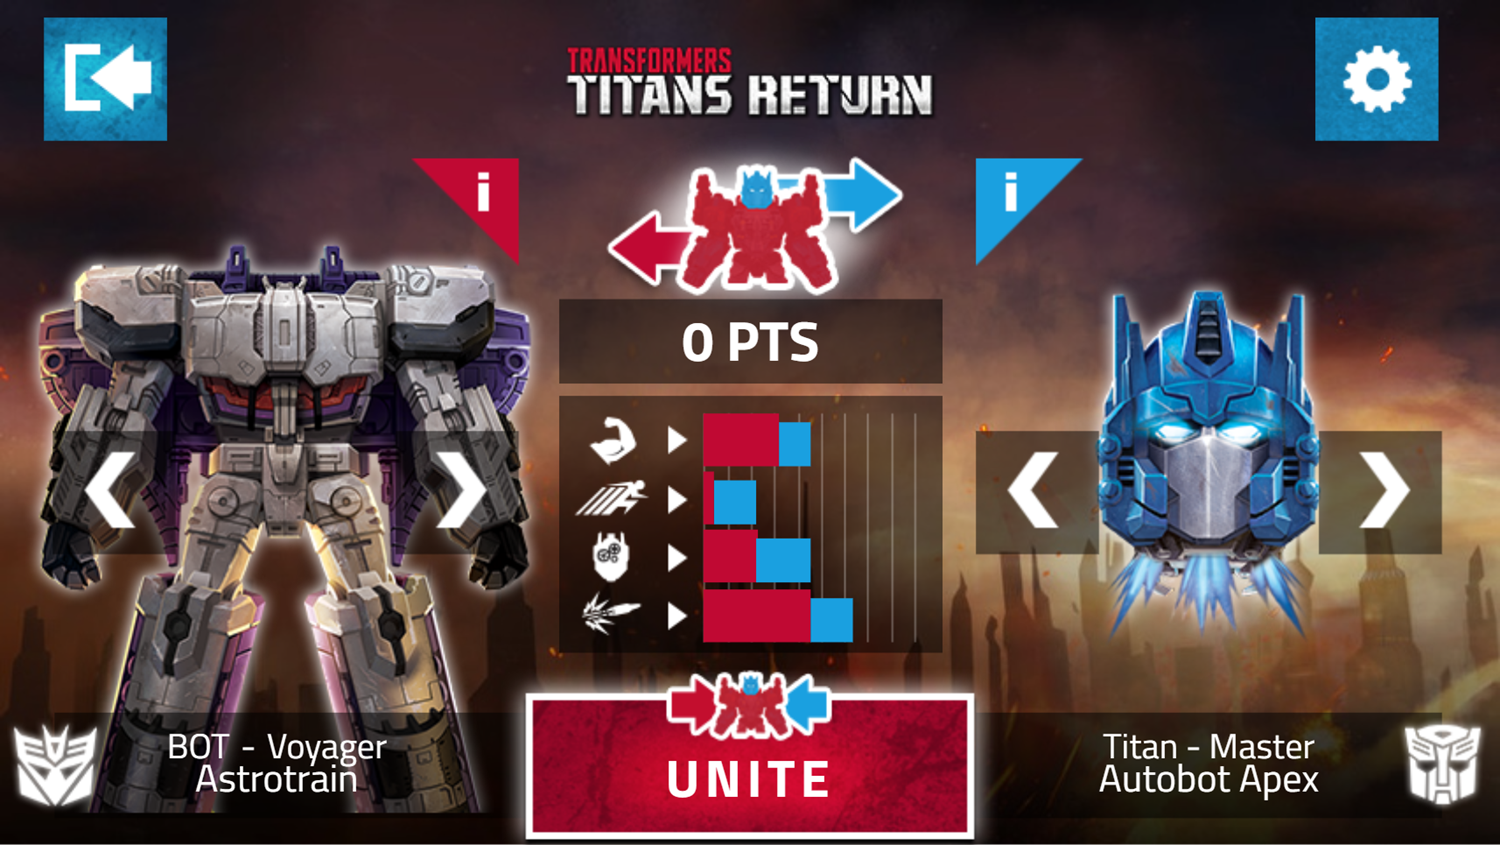 Transformers Titans Return Game Unite Body & Head Screenshot.